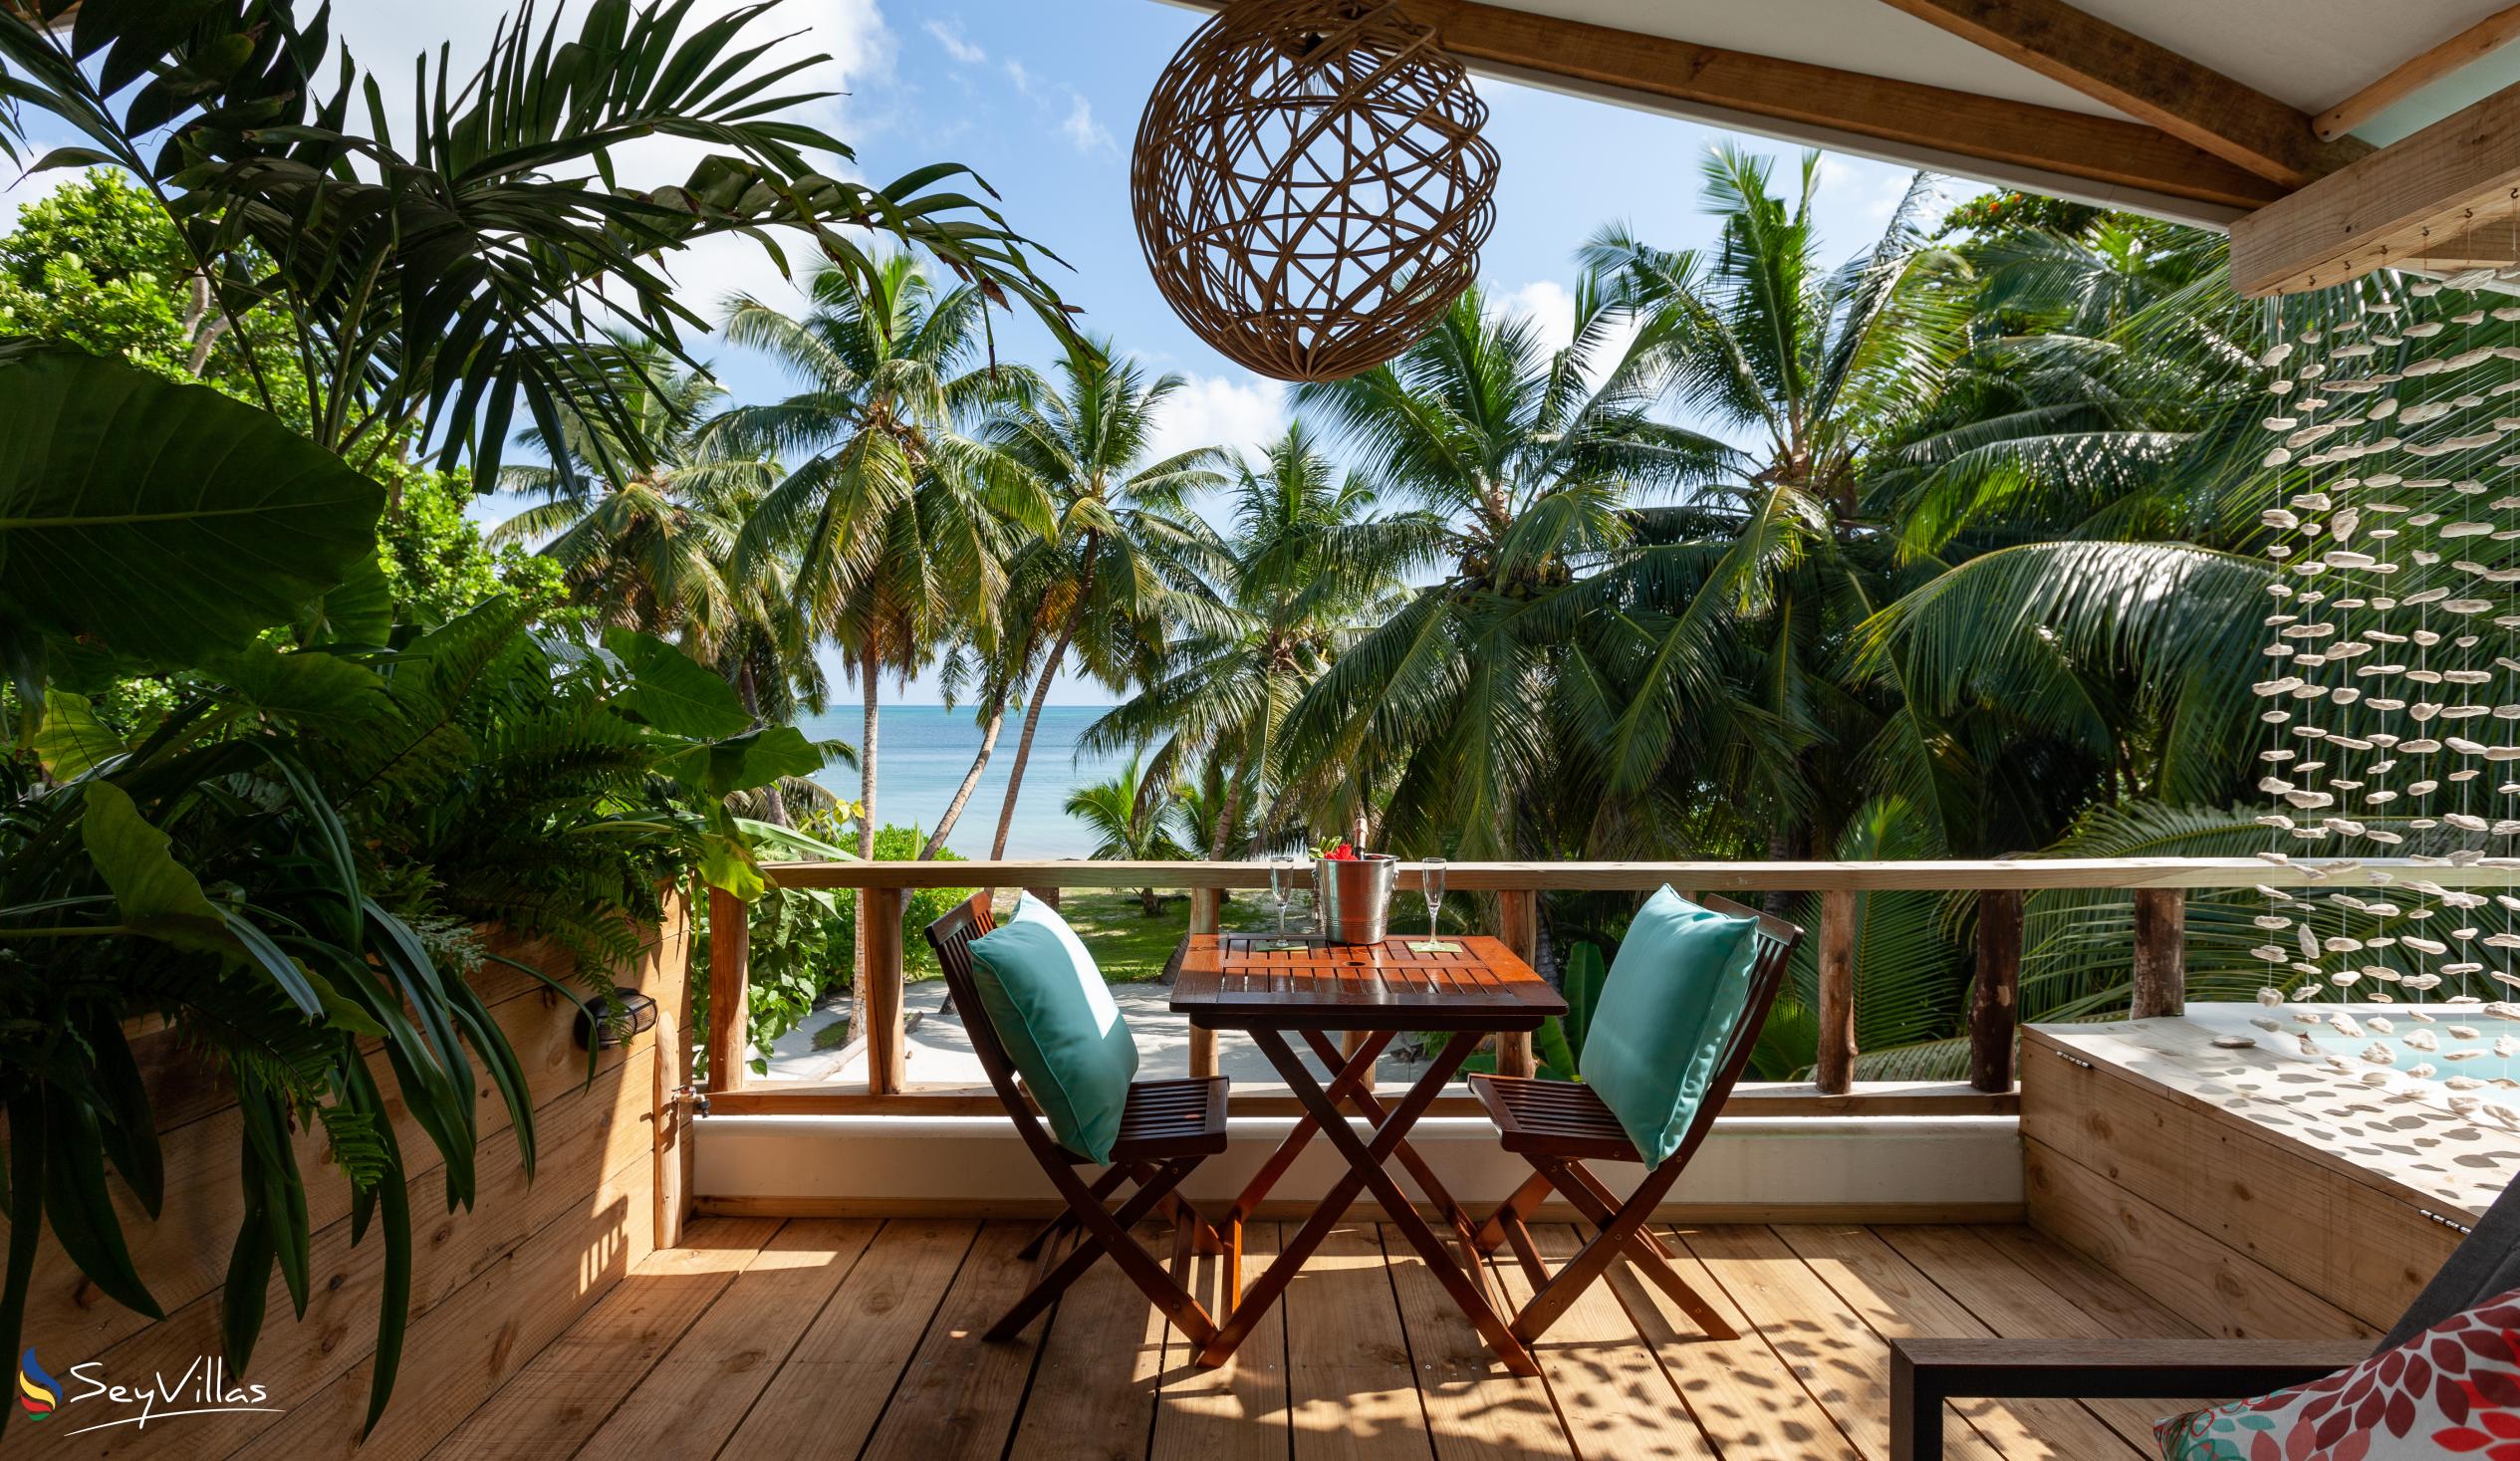 Photo 138: Bliss Hotel Praslin - Beach House - Beach Penthouse - Praslin (Seychelles)